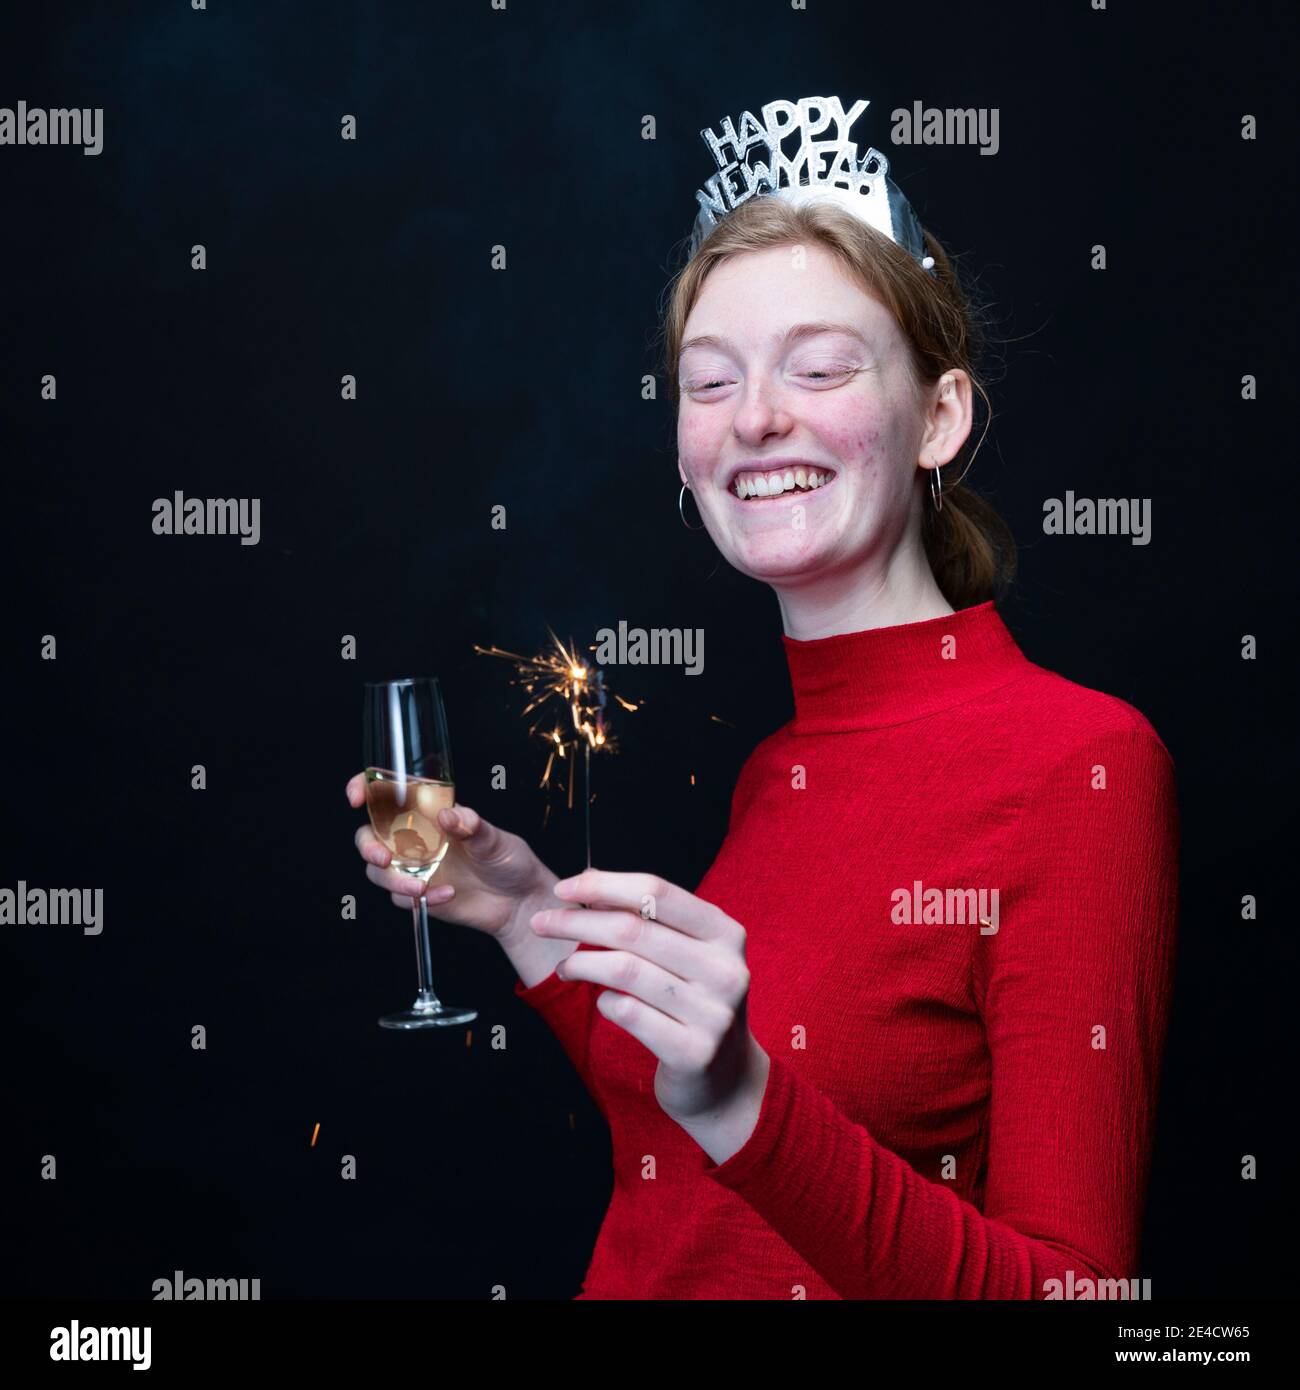 Woman celebrating New Years Eve Stock Photo